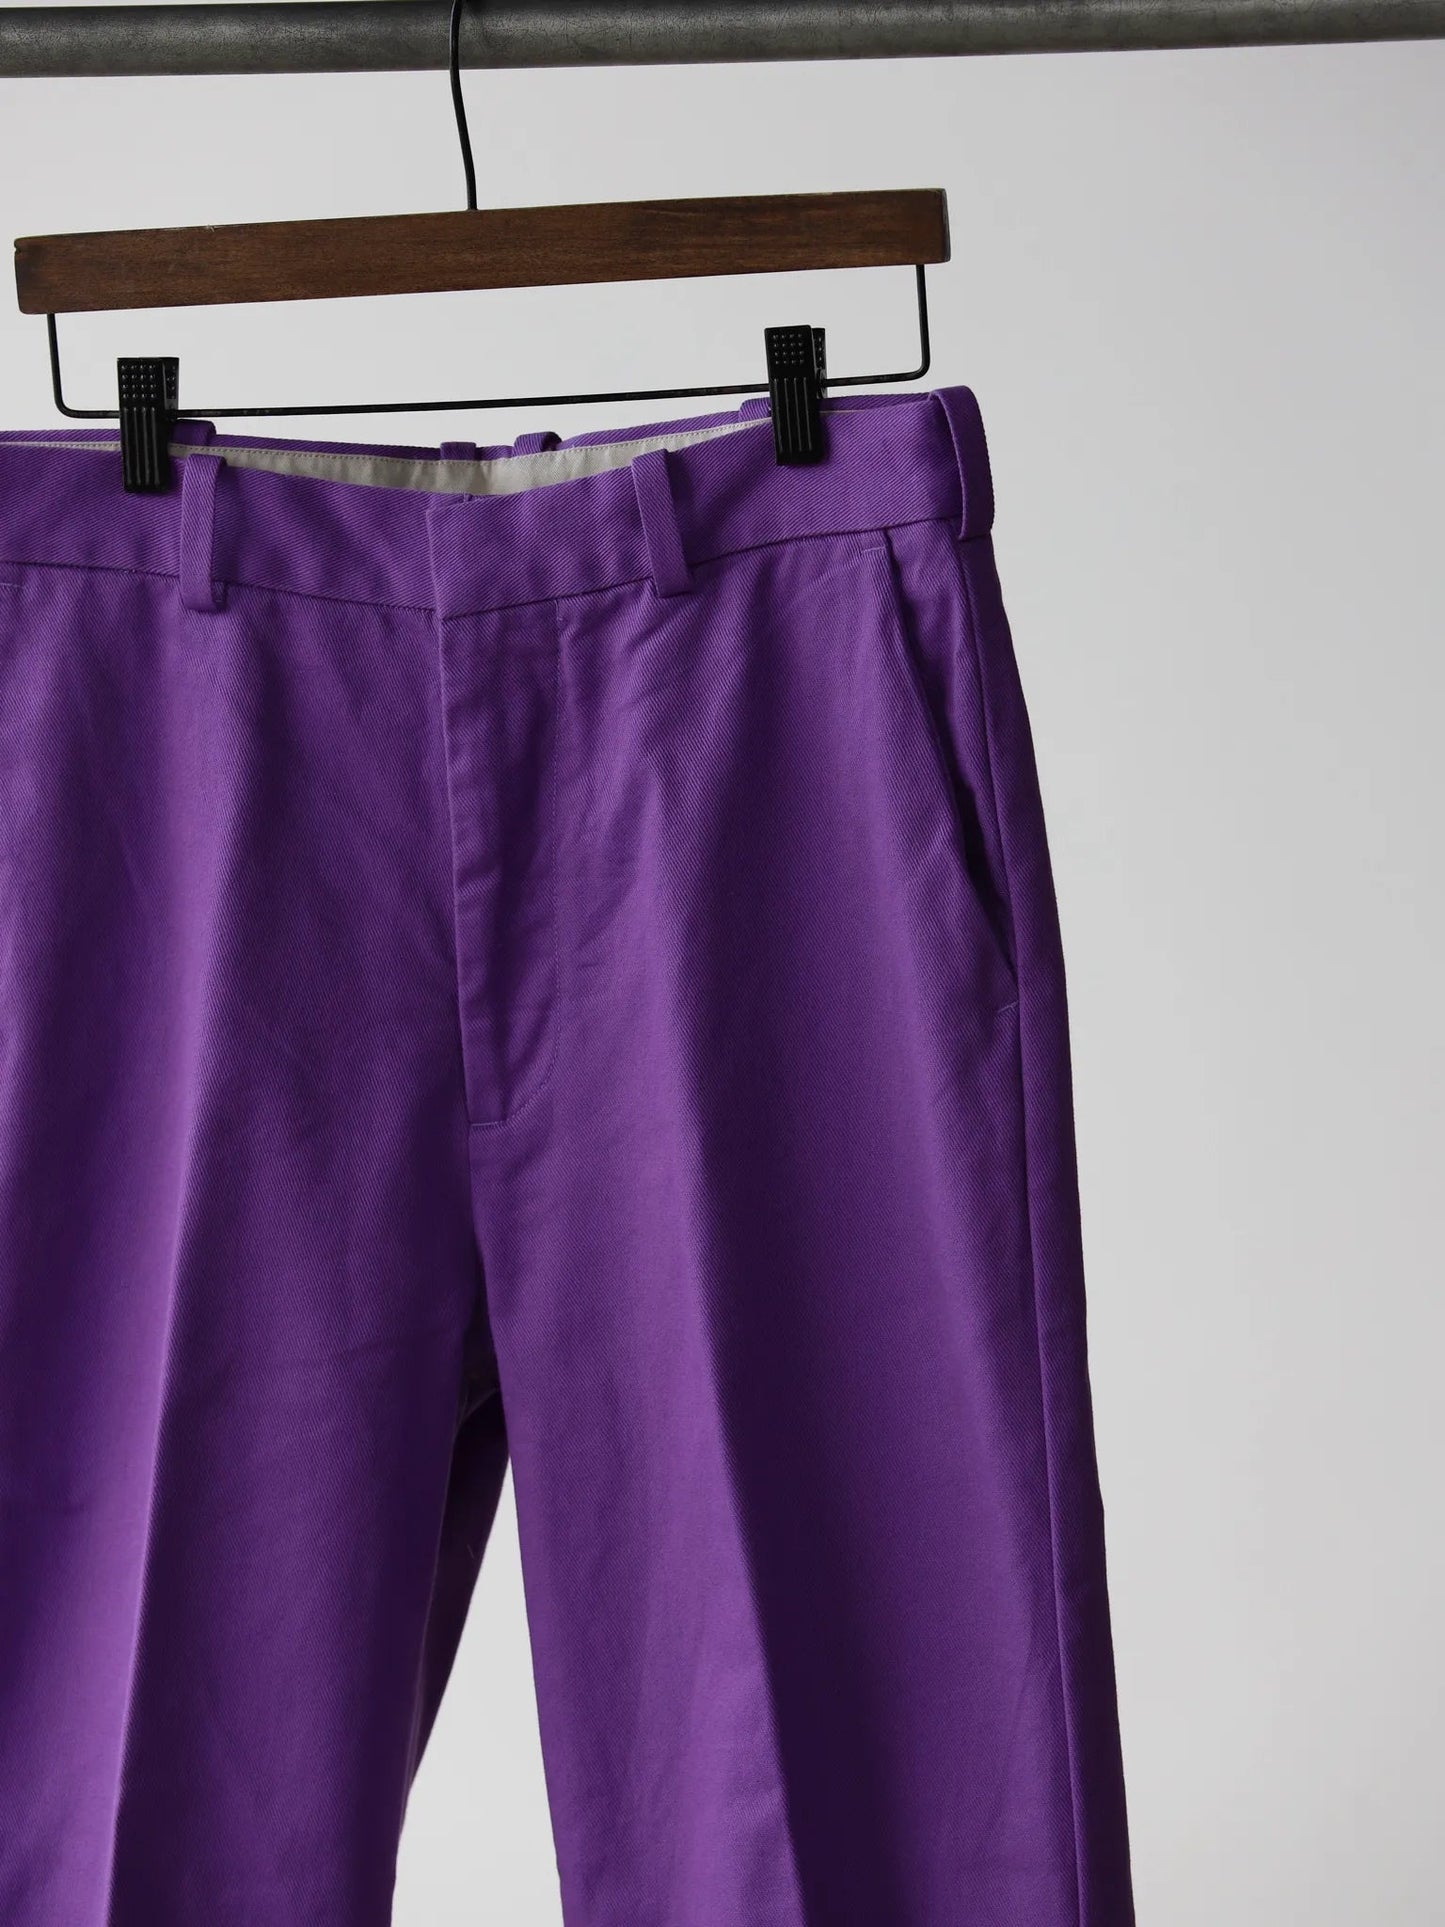 niceness-shorter-colored-slacks-purple-5